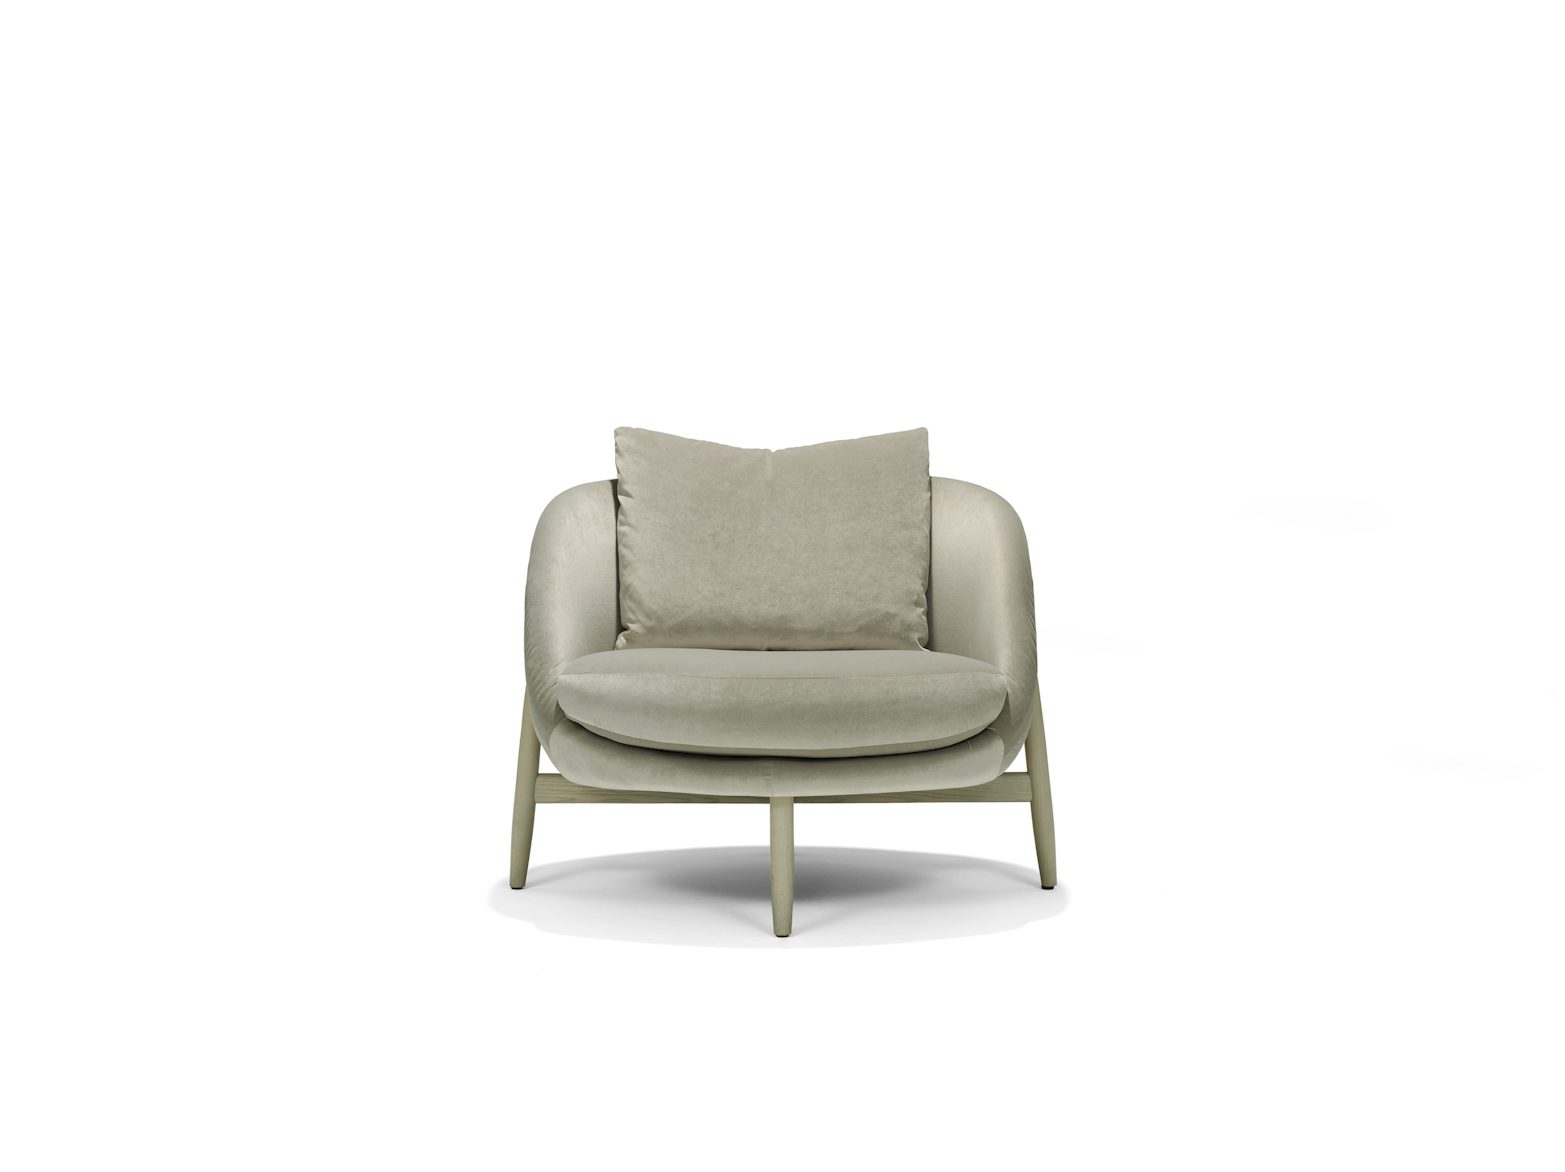 Linteloo Heath Lounge Chair Context Gallery 3